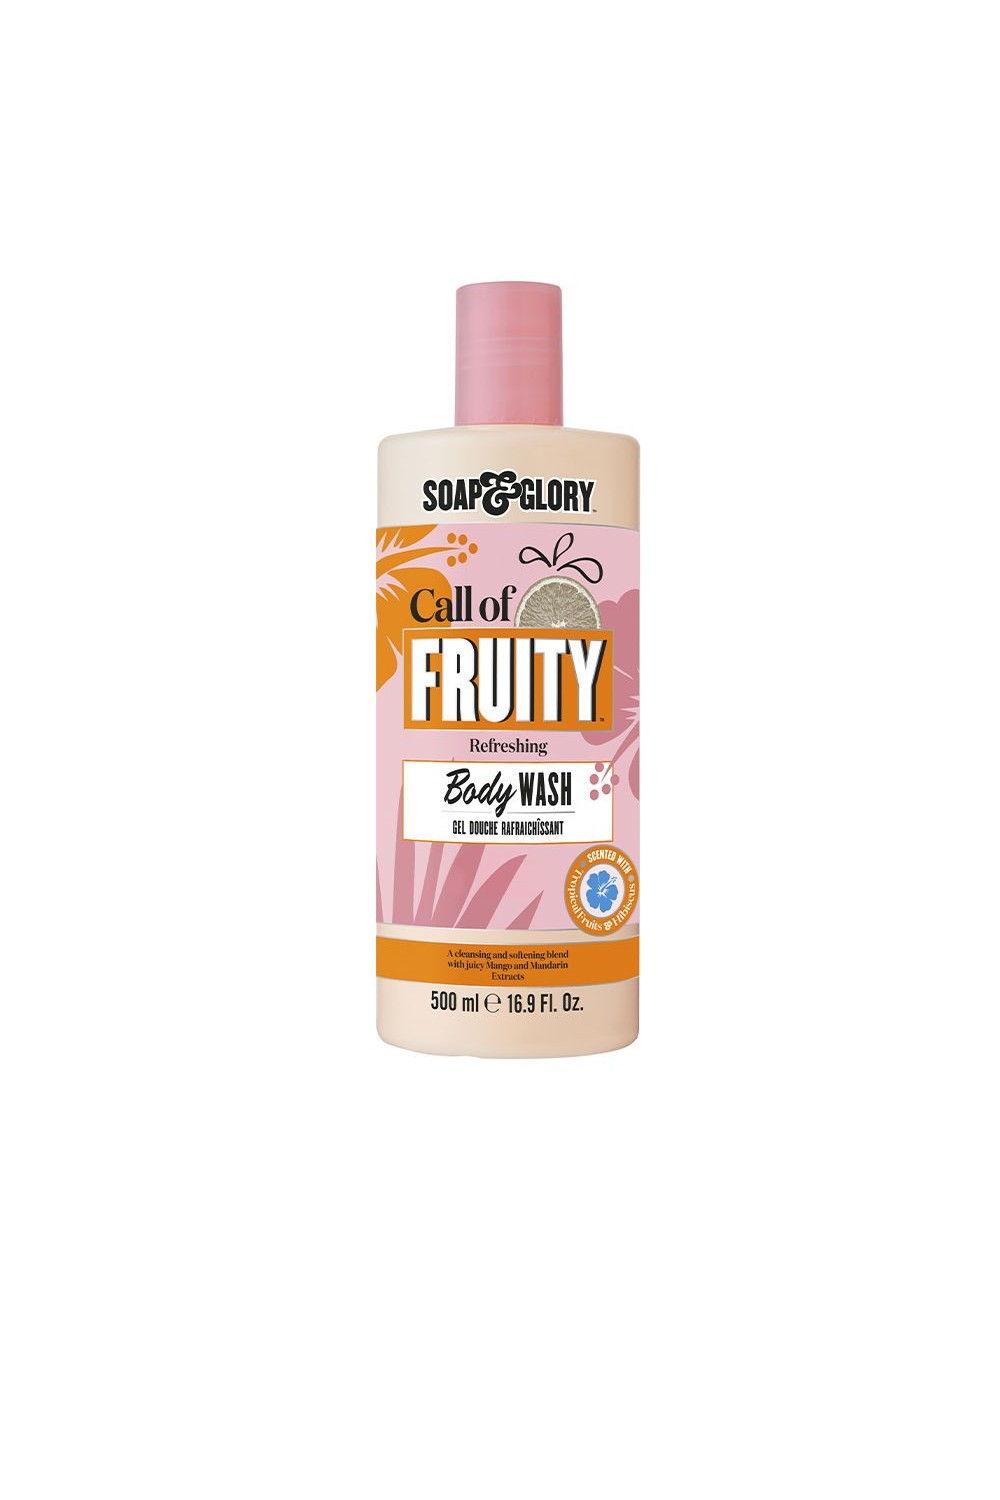 Soap & Glory Call Of Fruity Refreshing Body Wash 500ml